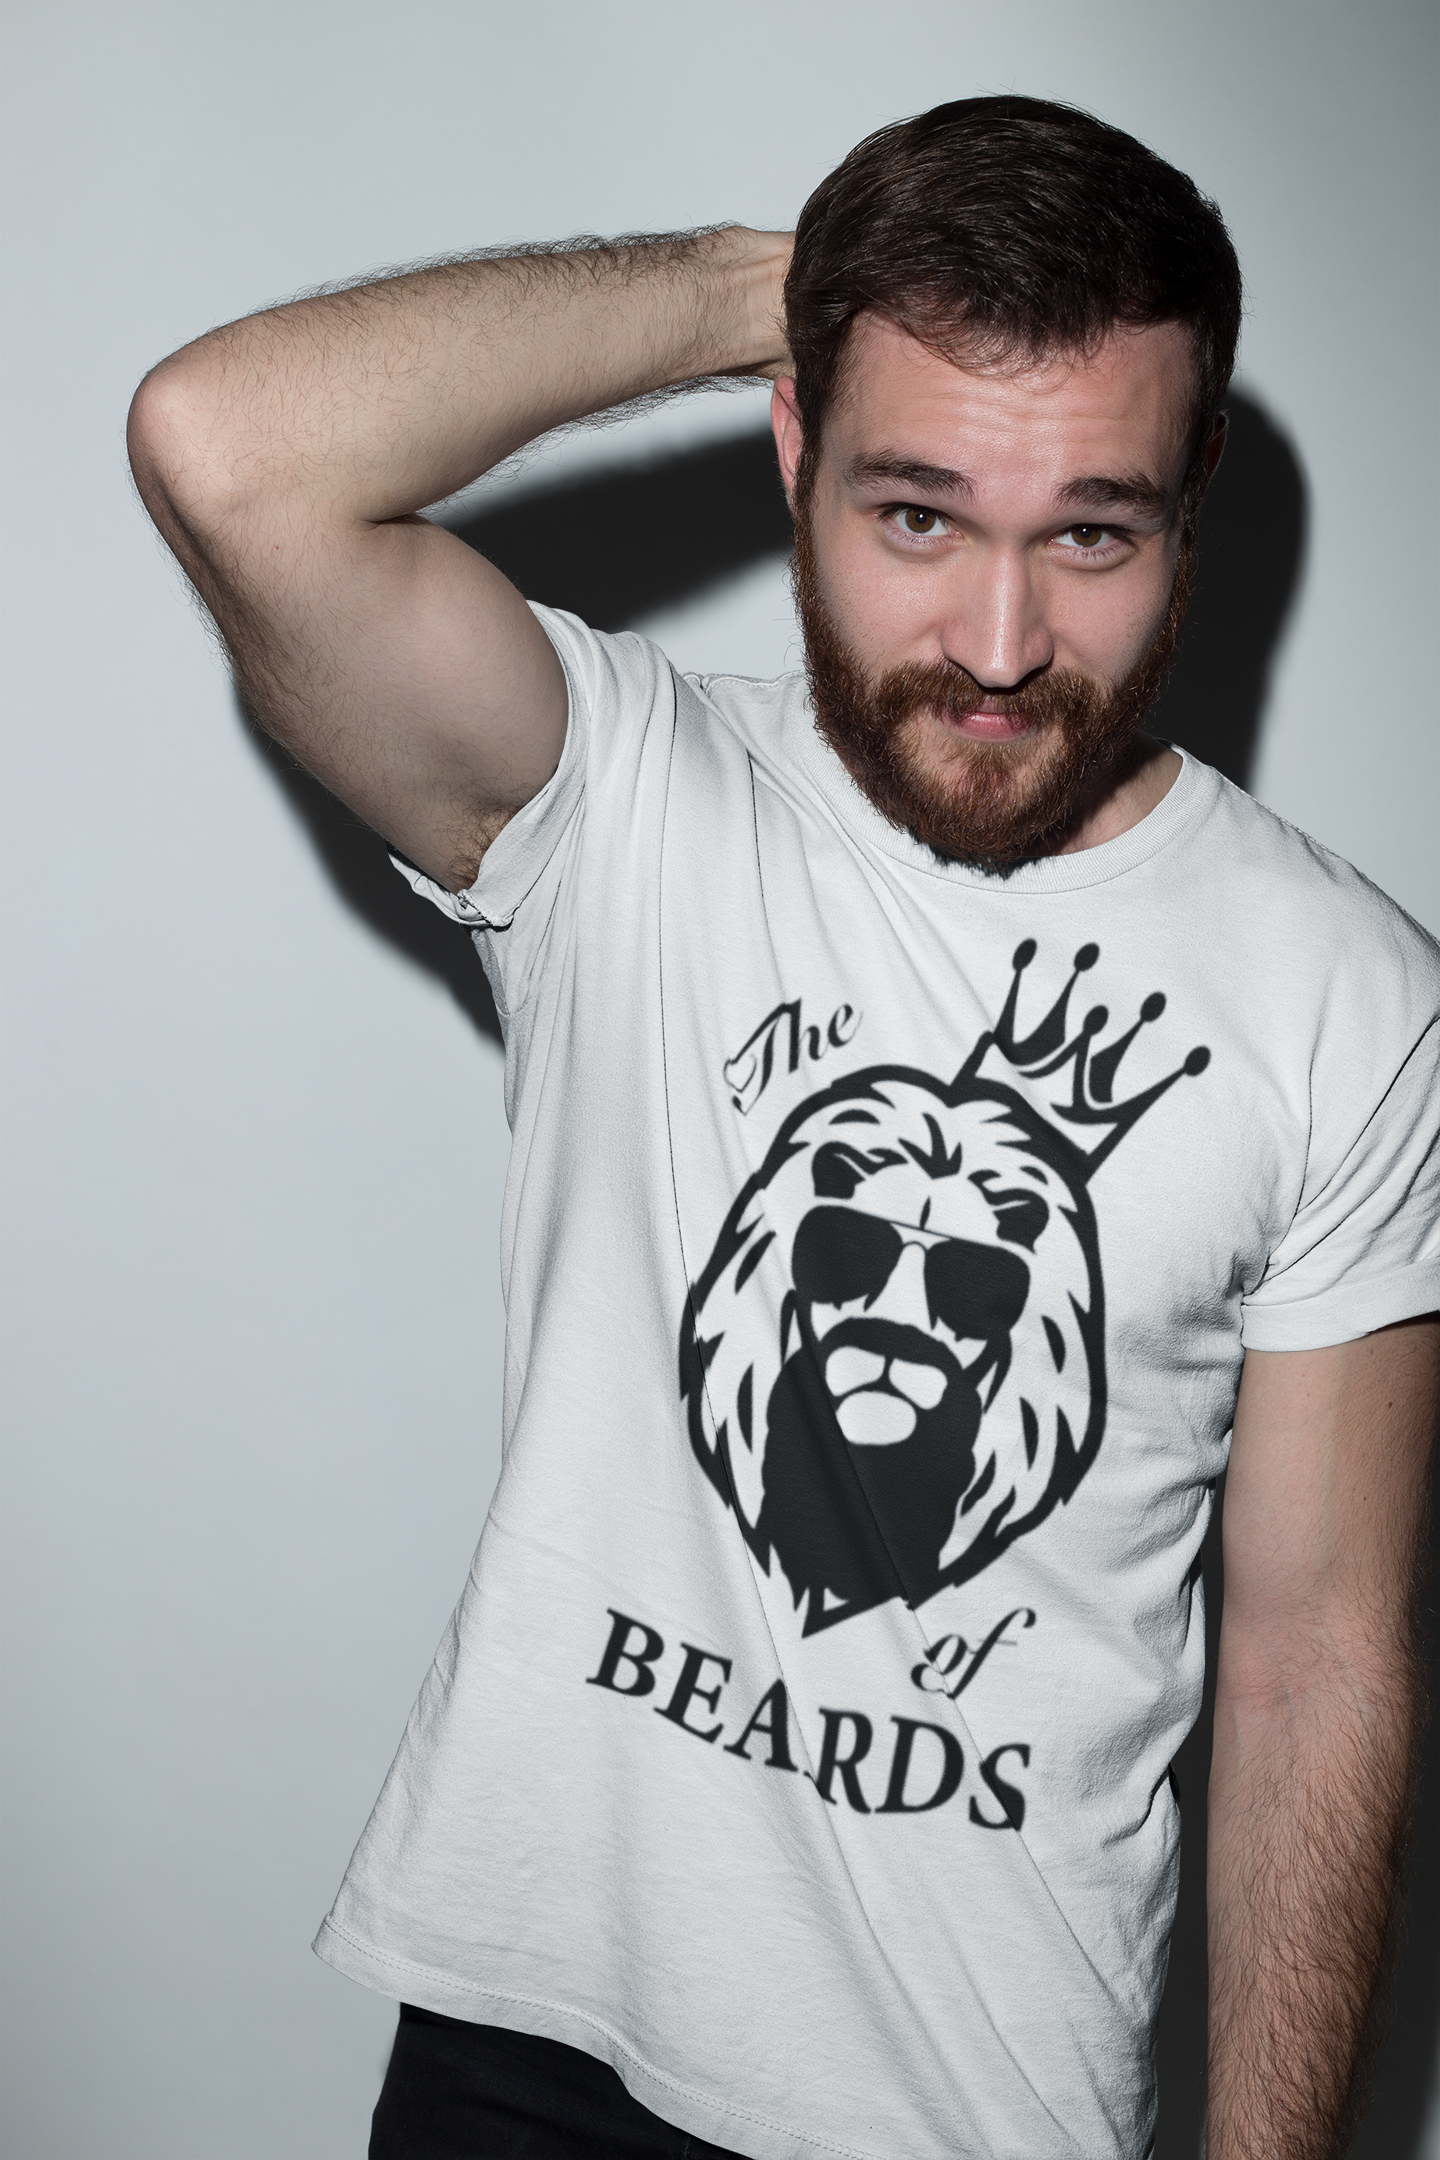 The King of Beards Shirt.